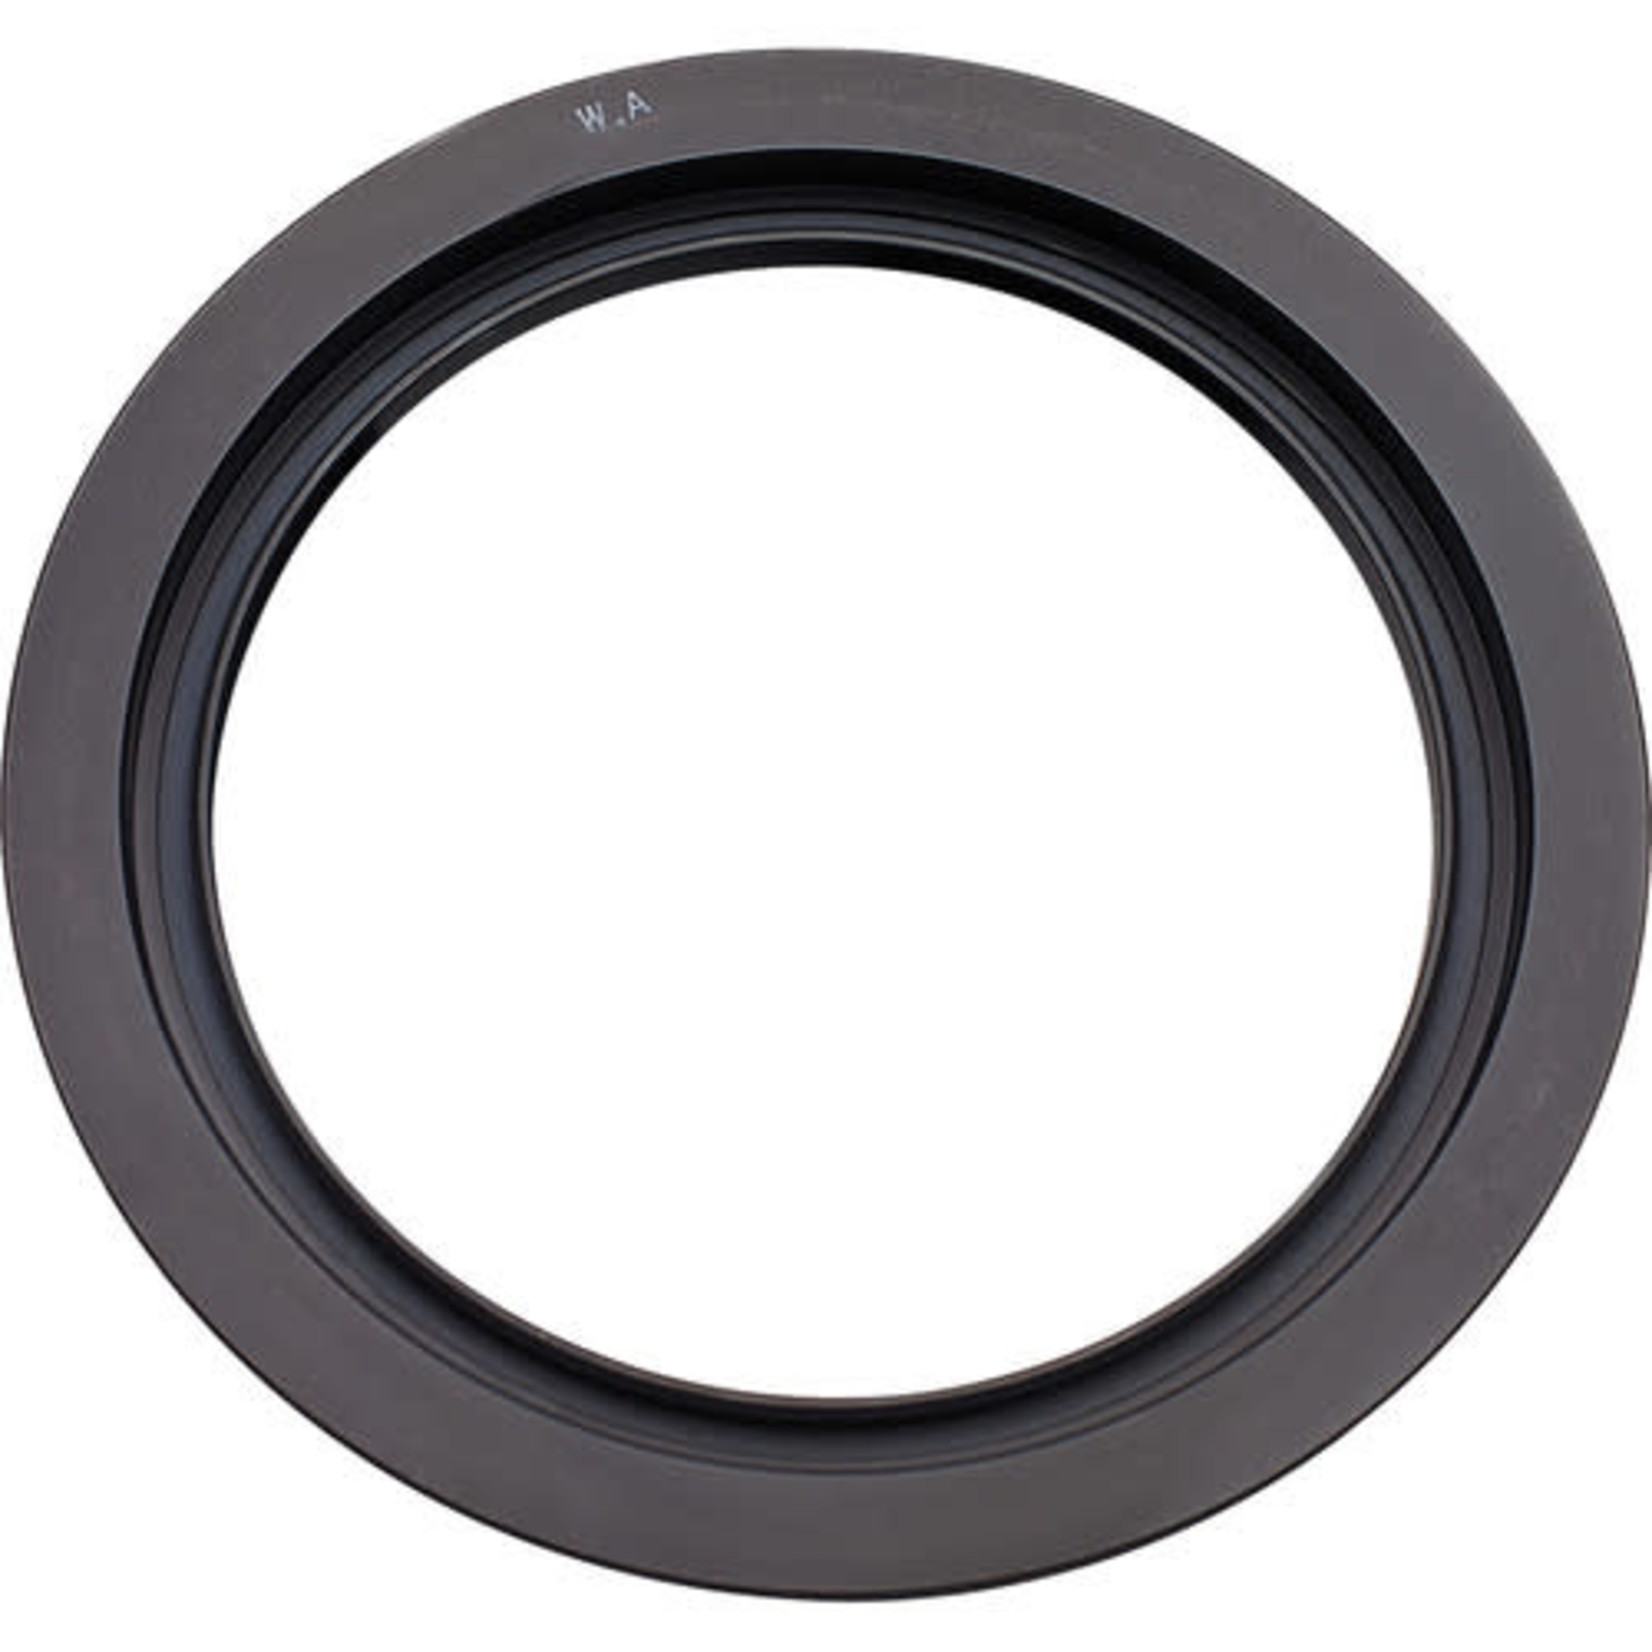 Lee LEE Filters 82mm Wide-Angle Lens Adapter Ring for 100mm System Filter Holder